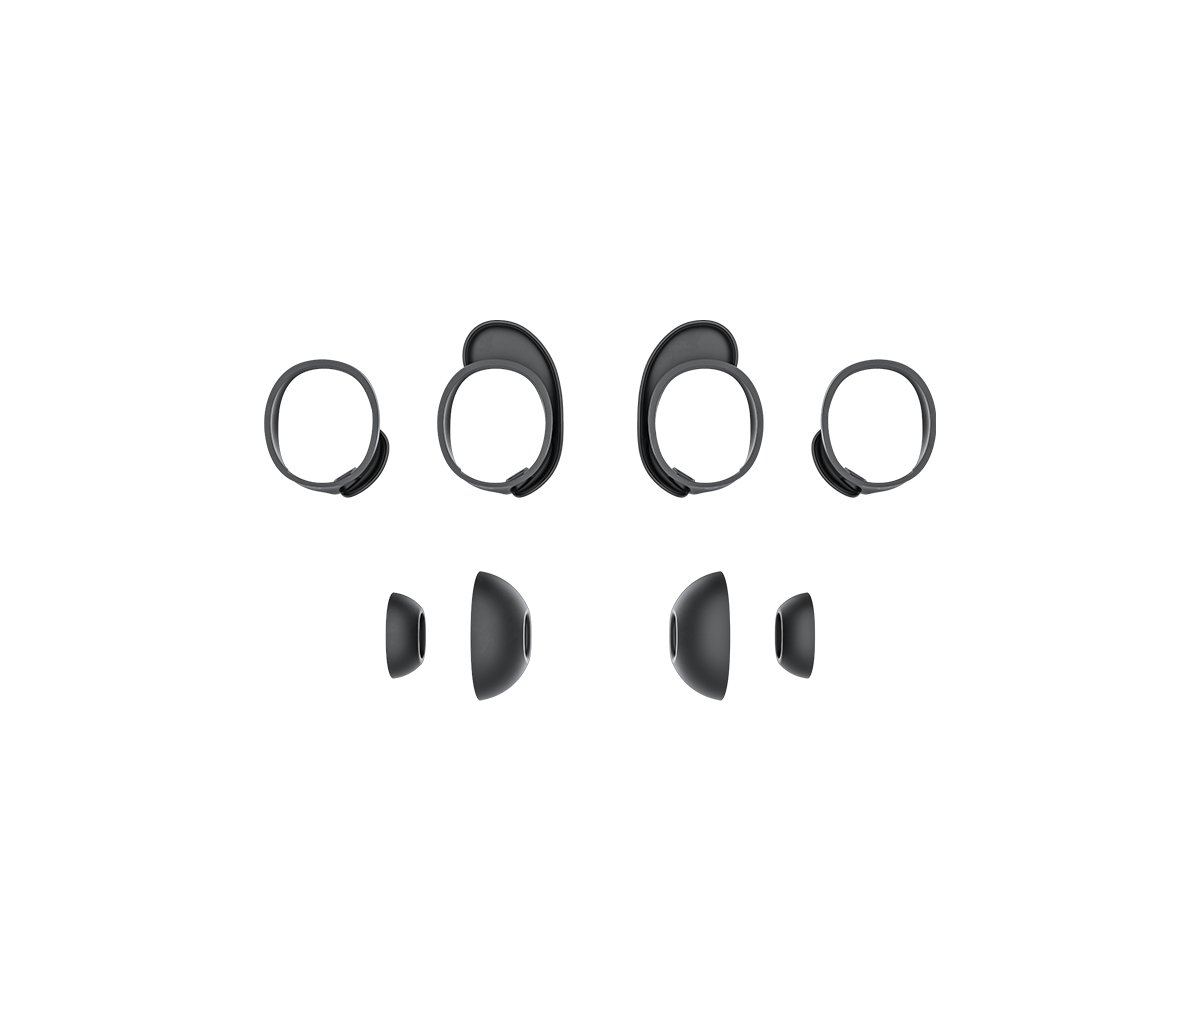 Bose QuietComfort® Earbuds II Alternate Sizing Kit Eclipse Gray